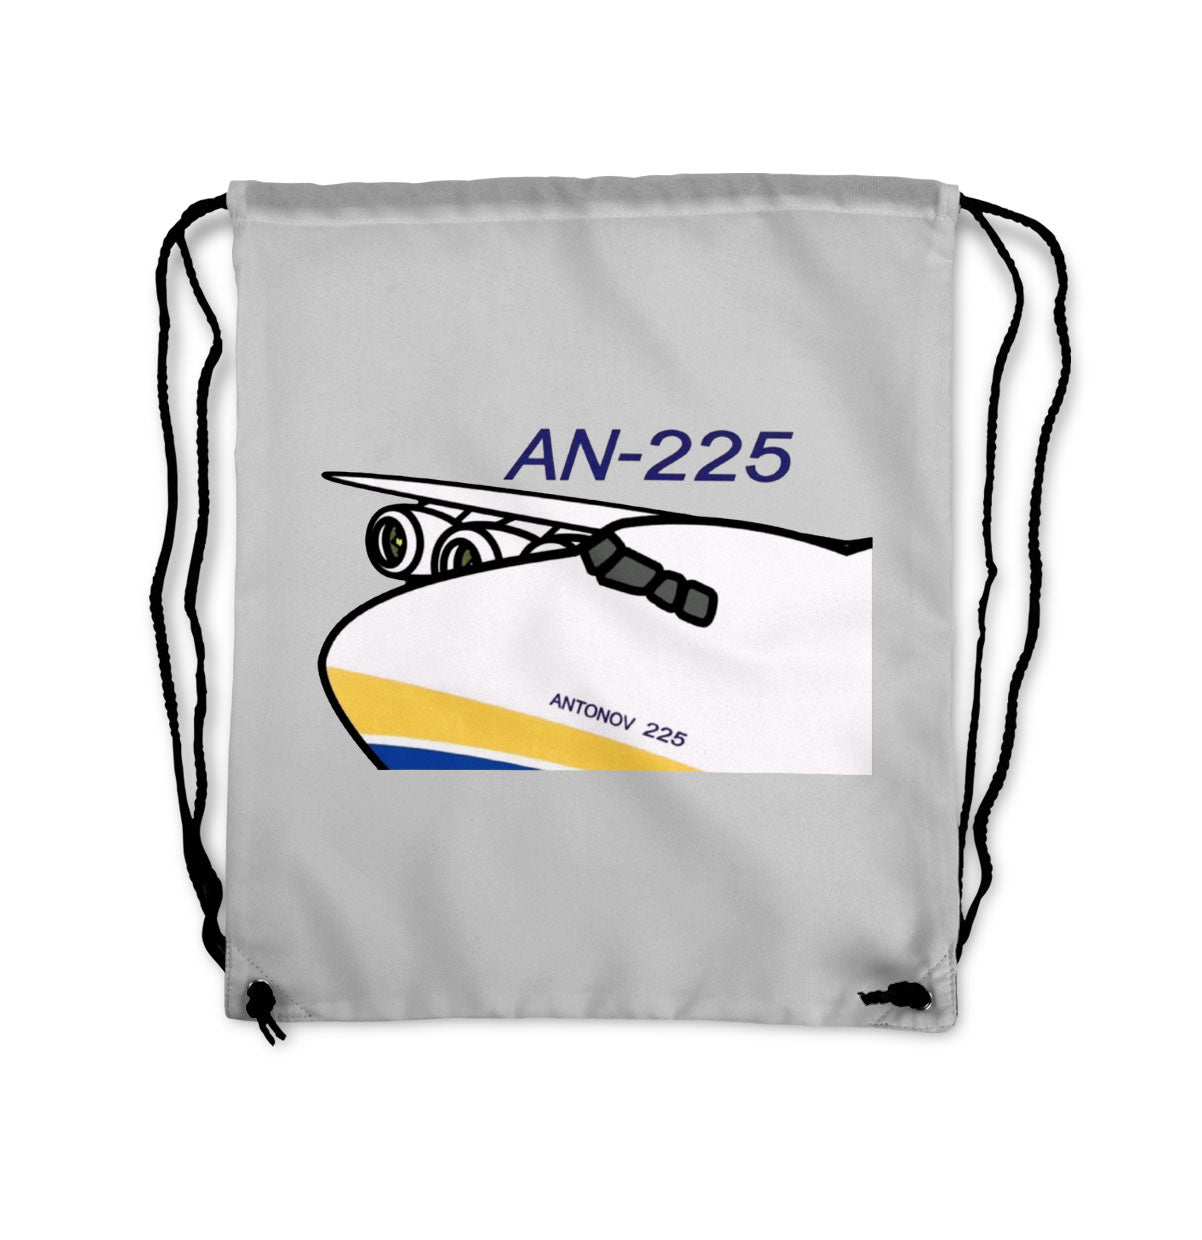 Antonov AN-225 (11) Designed Drawstring Bags